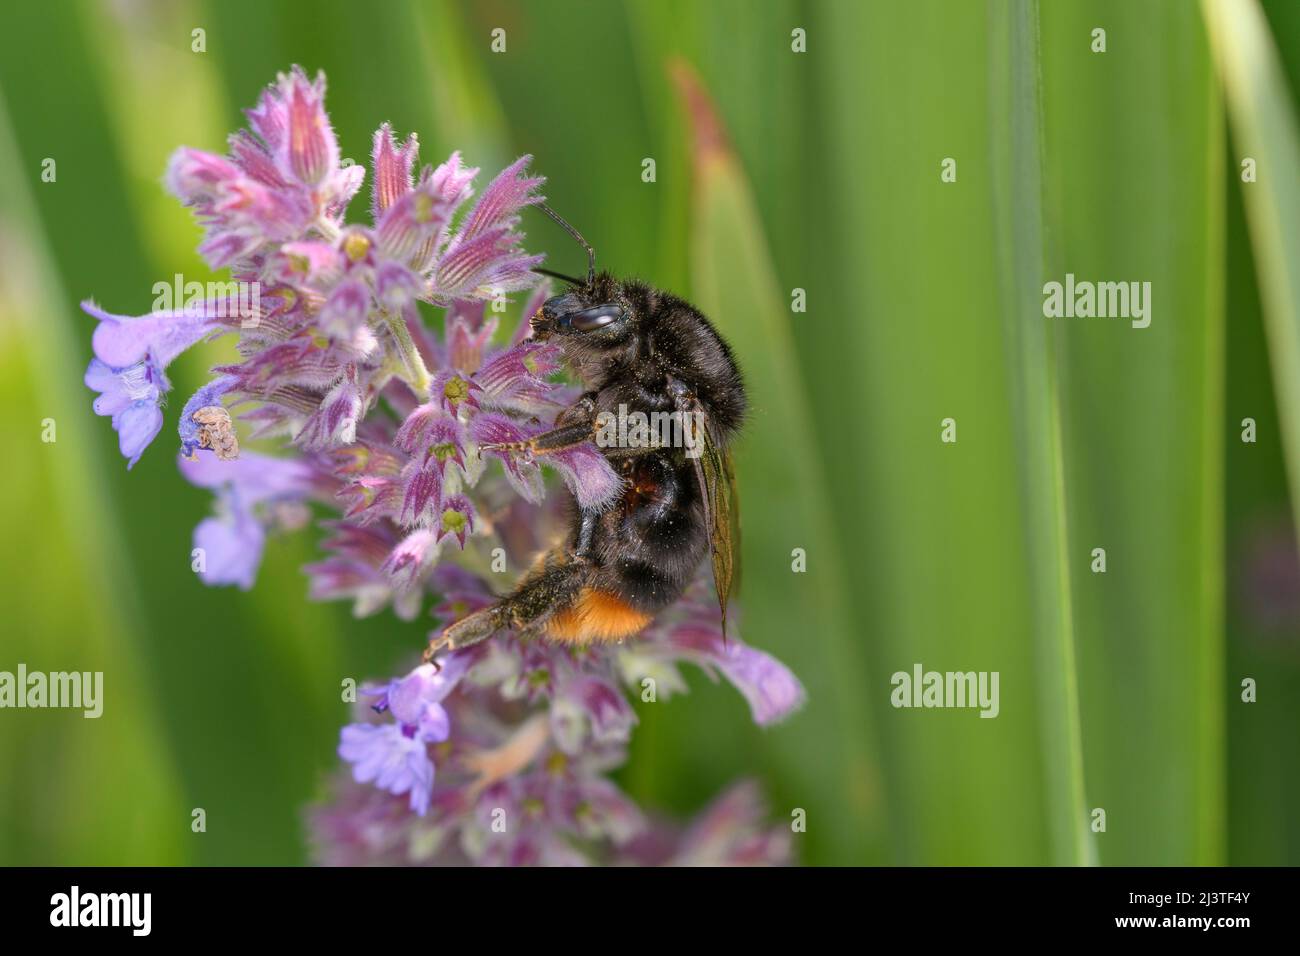 Red-tailed bumblebee - Bombus lapidarius - pollinates catmint or catnip - Nepeta „Walker`s Low“ Stock Photo